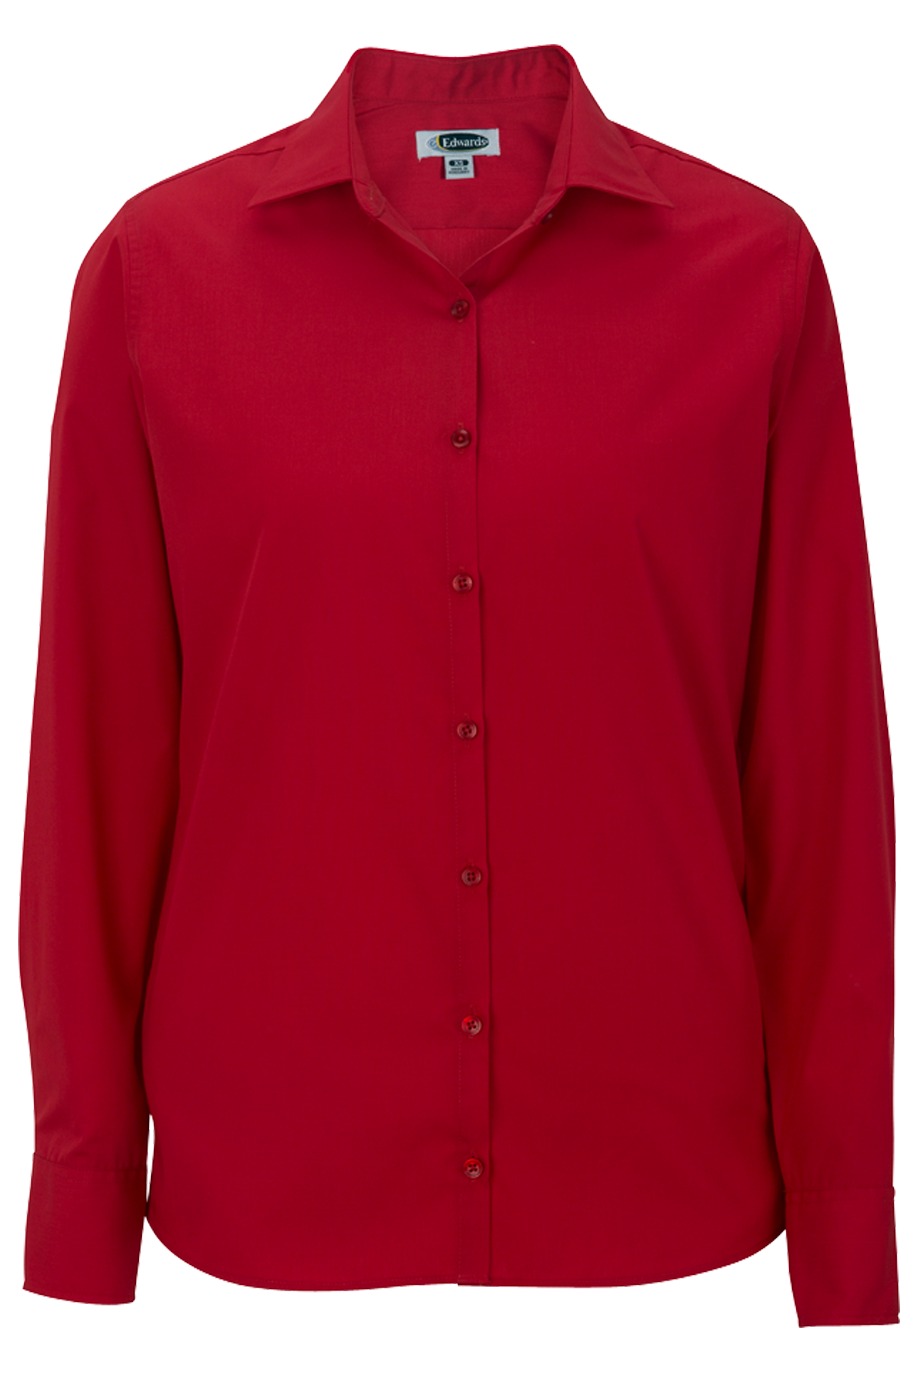 Edwards Garment 5273 - Ladies Poplin LongSleeve Shirt